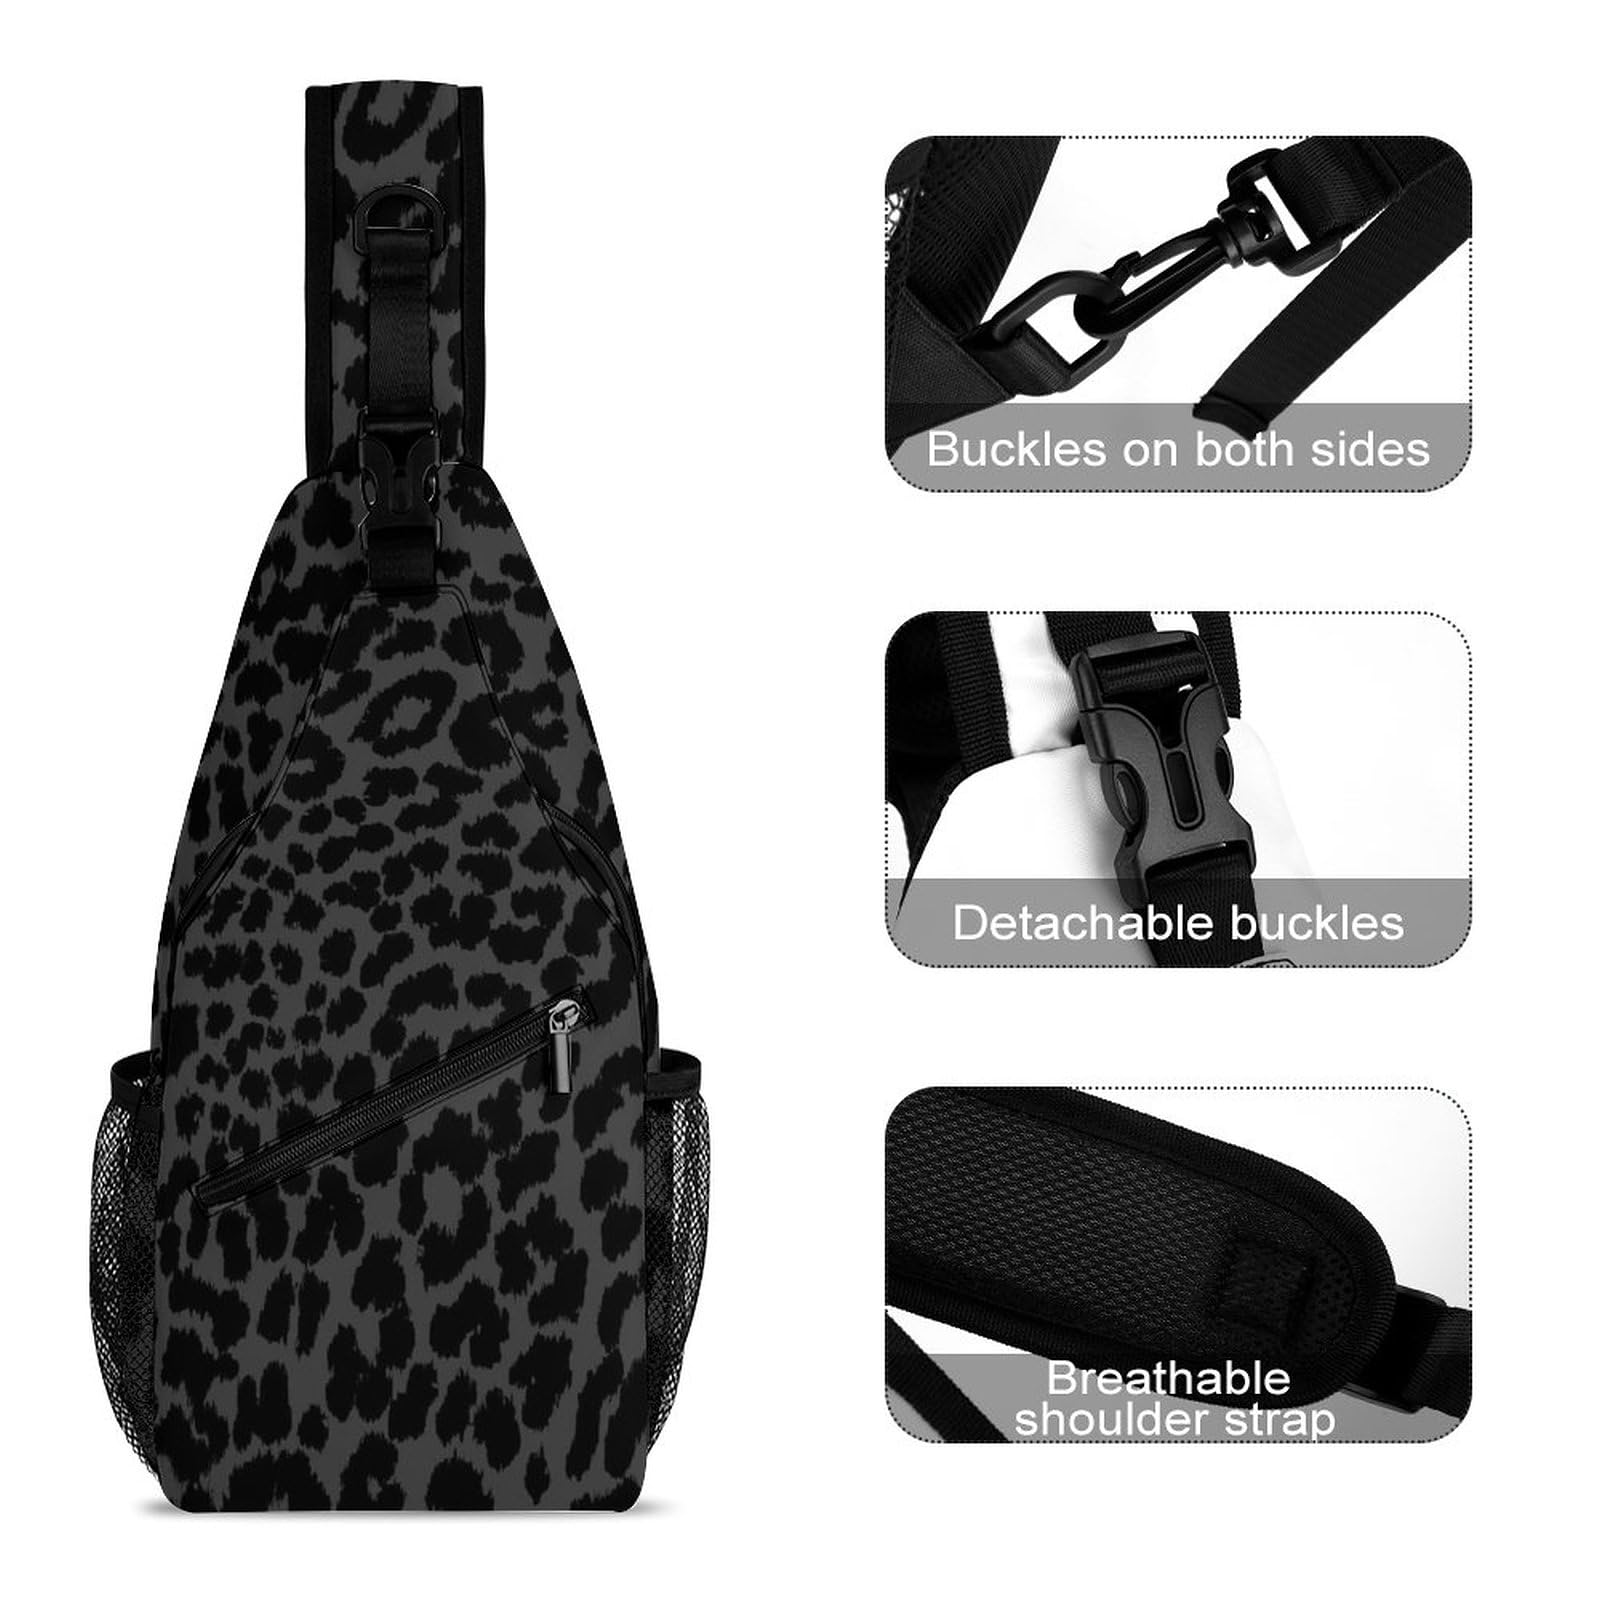 Small Sling Backpack for Men Women, Dark Gray Black Leopard Cheetah Print Chest Bag Sports Gym Daypack Cross Body Bag for Hiking Traveling Outdoors